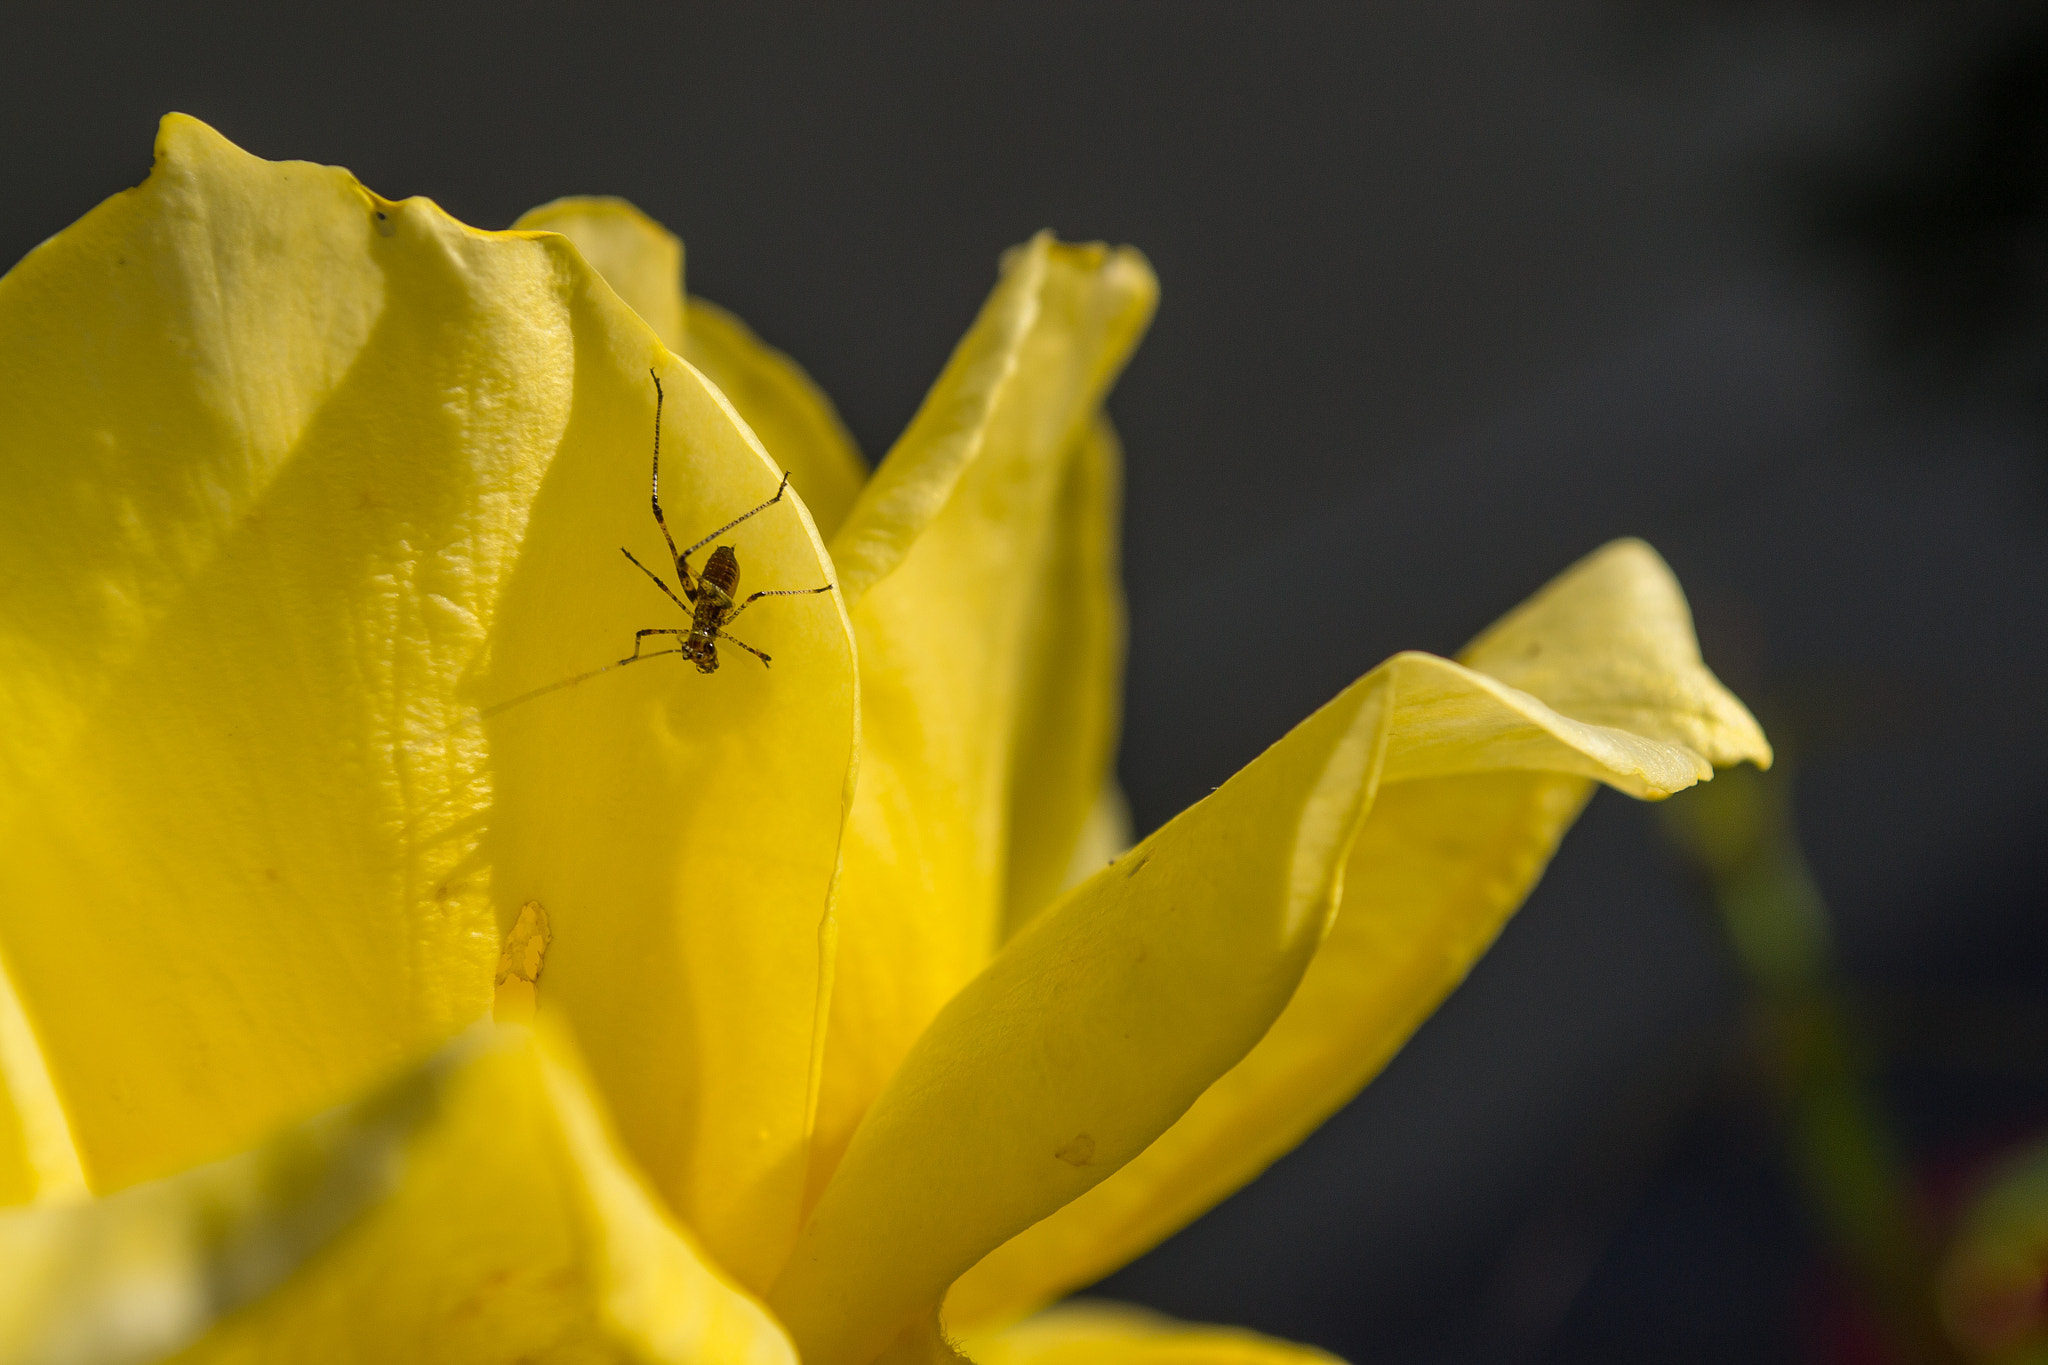 Bug basking in the sunlight on a flower